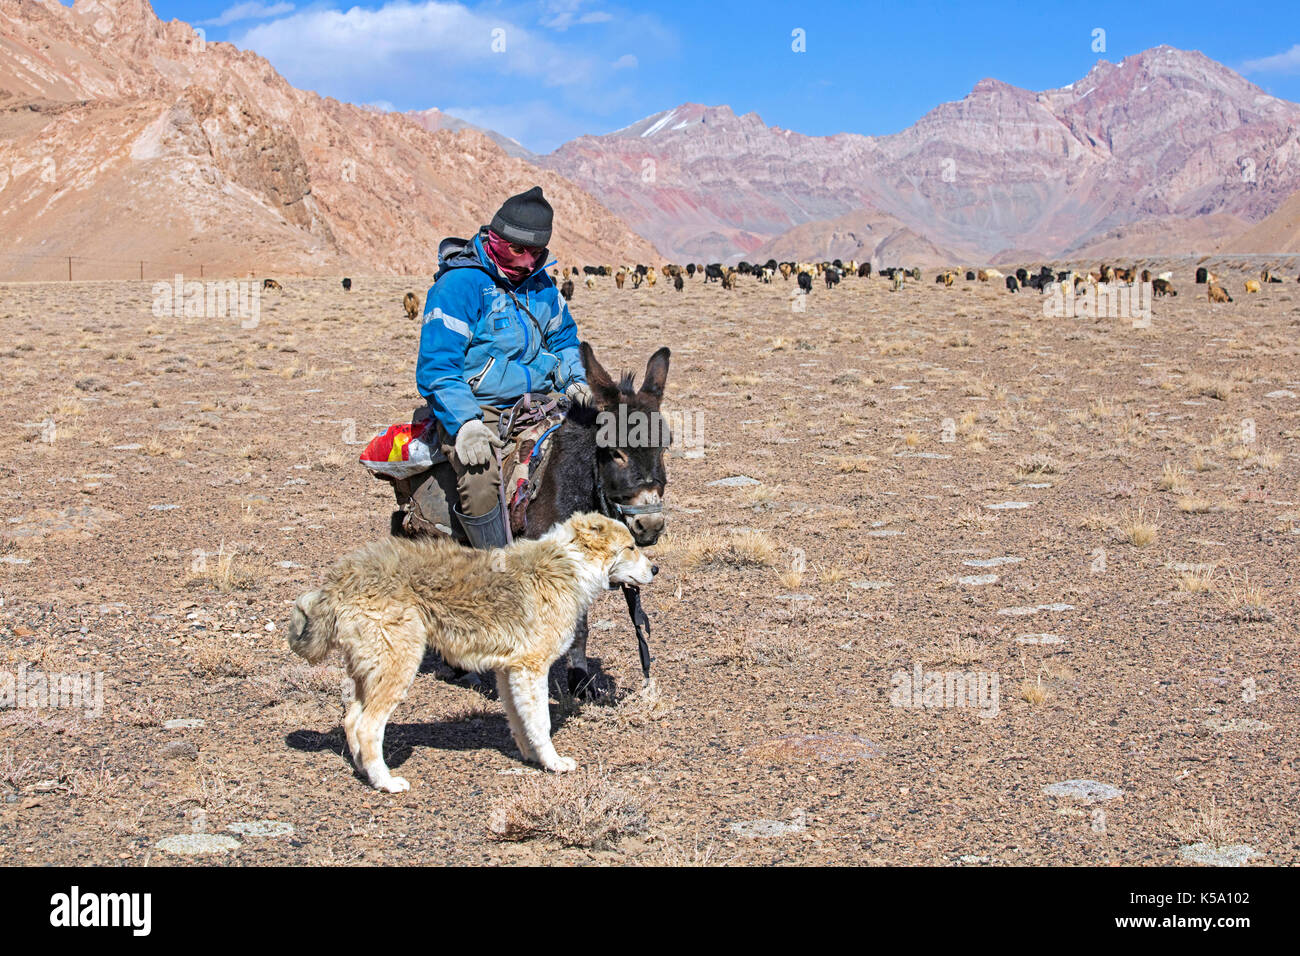 Tajik goatherd riding donkey and Central Asian shepherd dog herding domestic goats in the Pamir Mountains, Gorno-Badakhshan province, Tajikistan Stock Photo